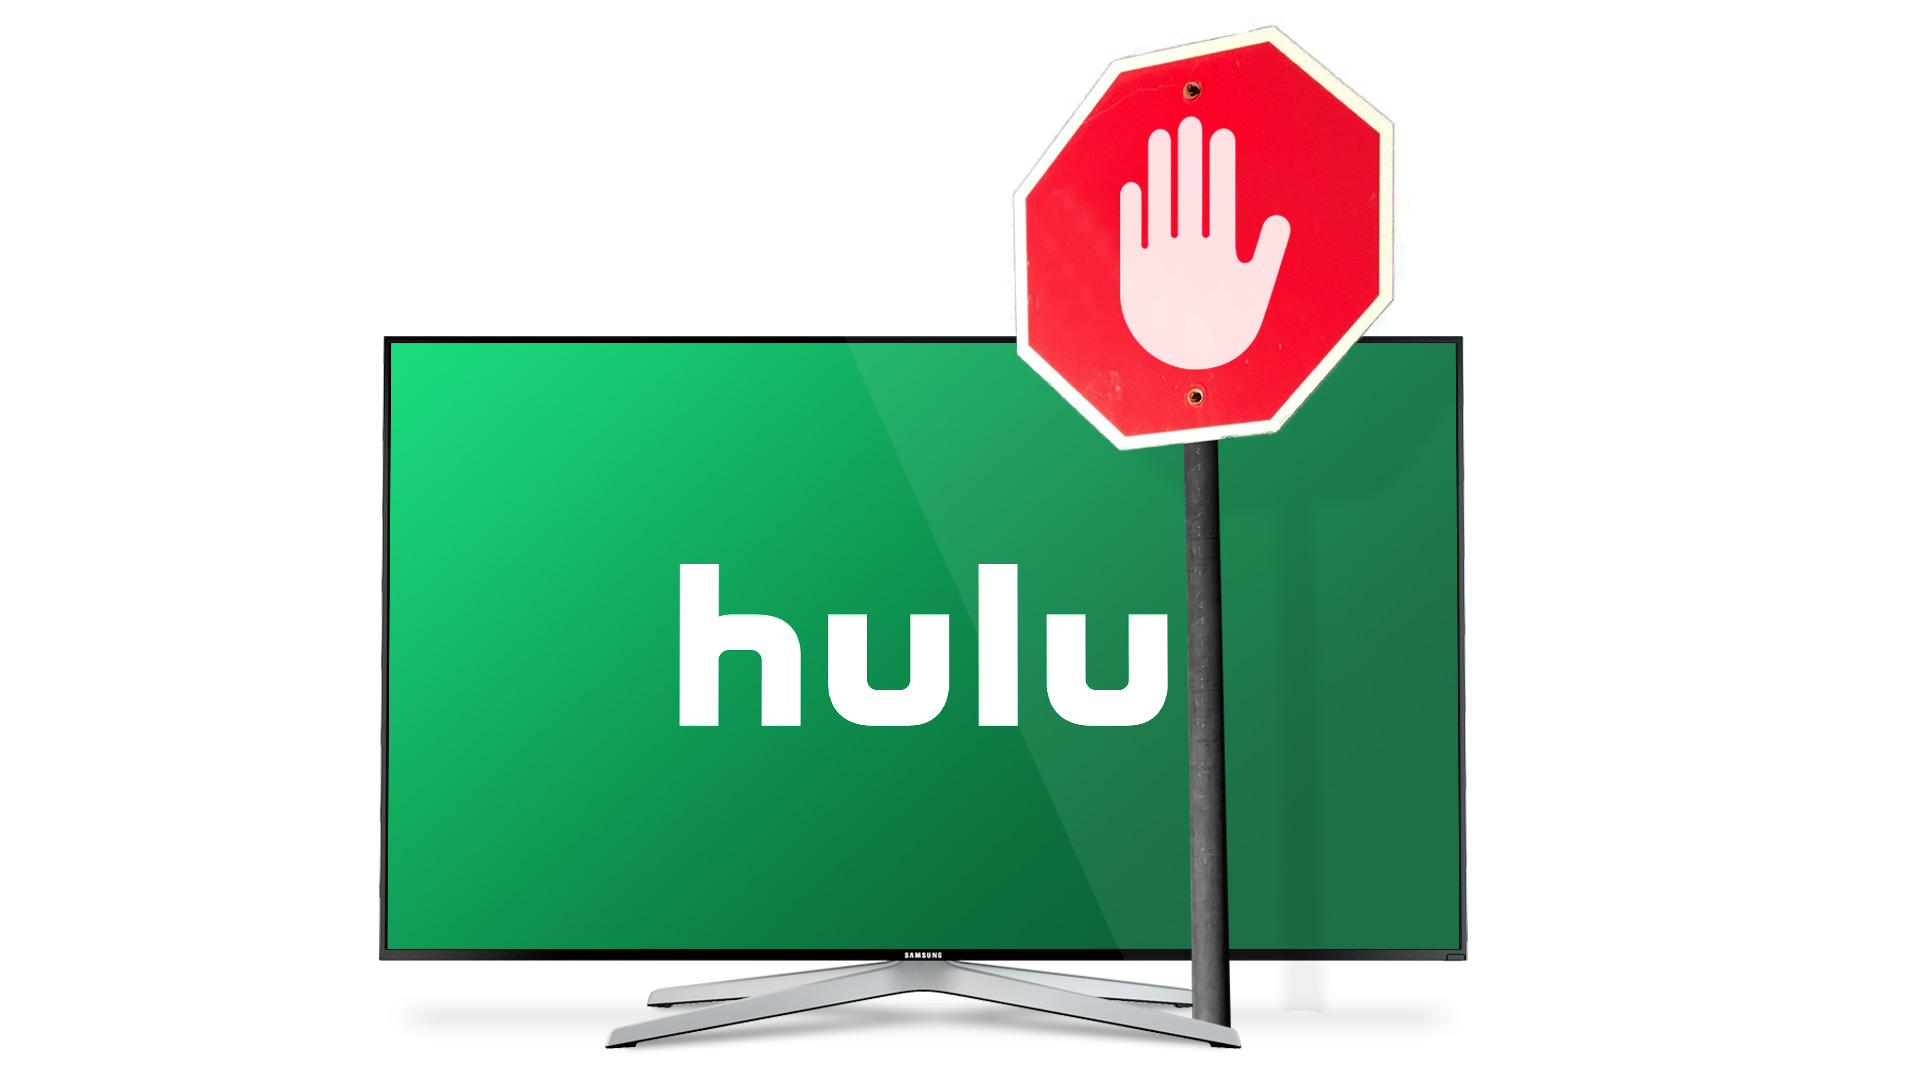 HD TV with Hulu Ad Blocker stop sign